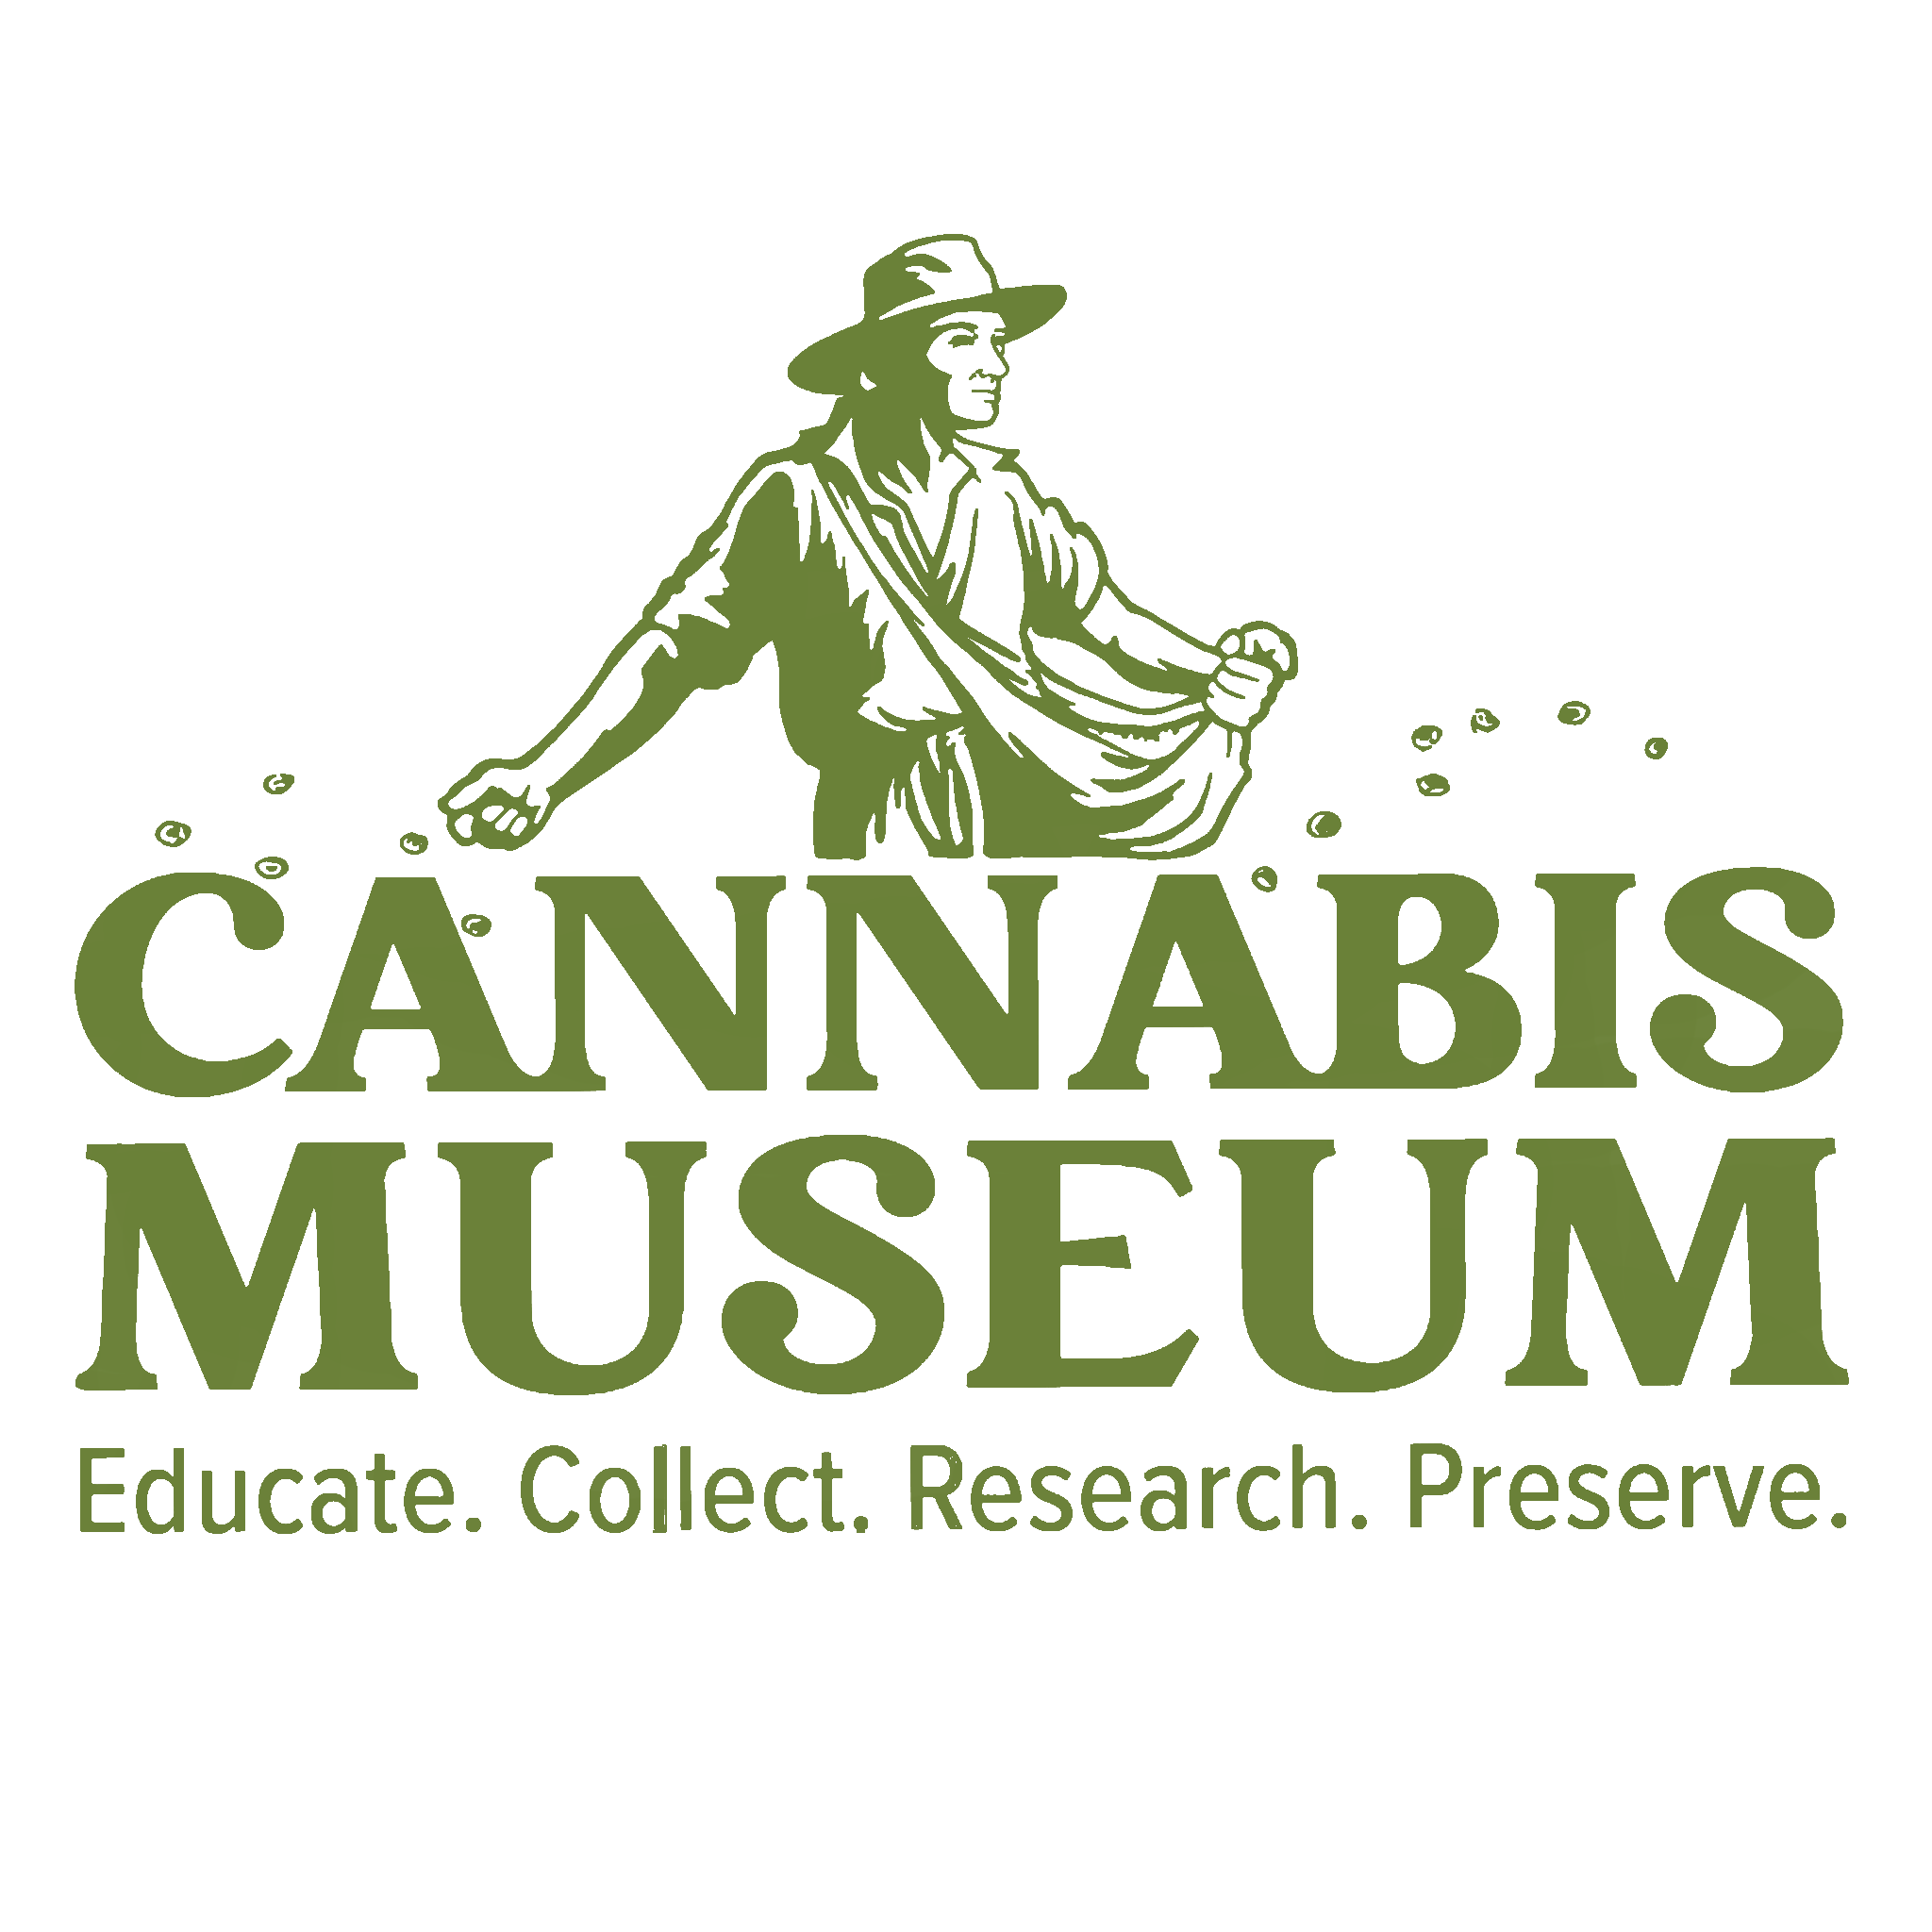 Cannabis Museum logo